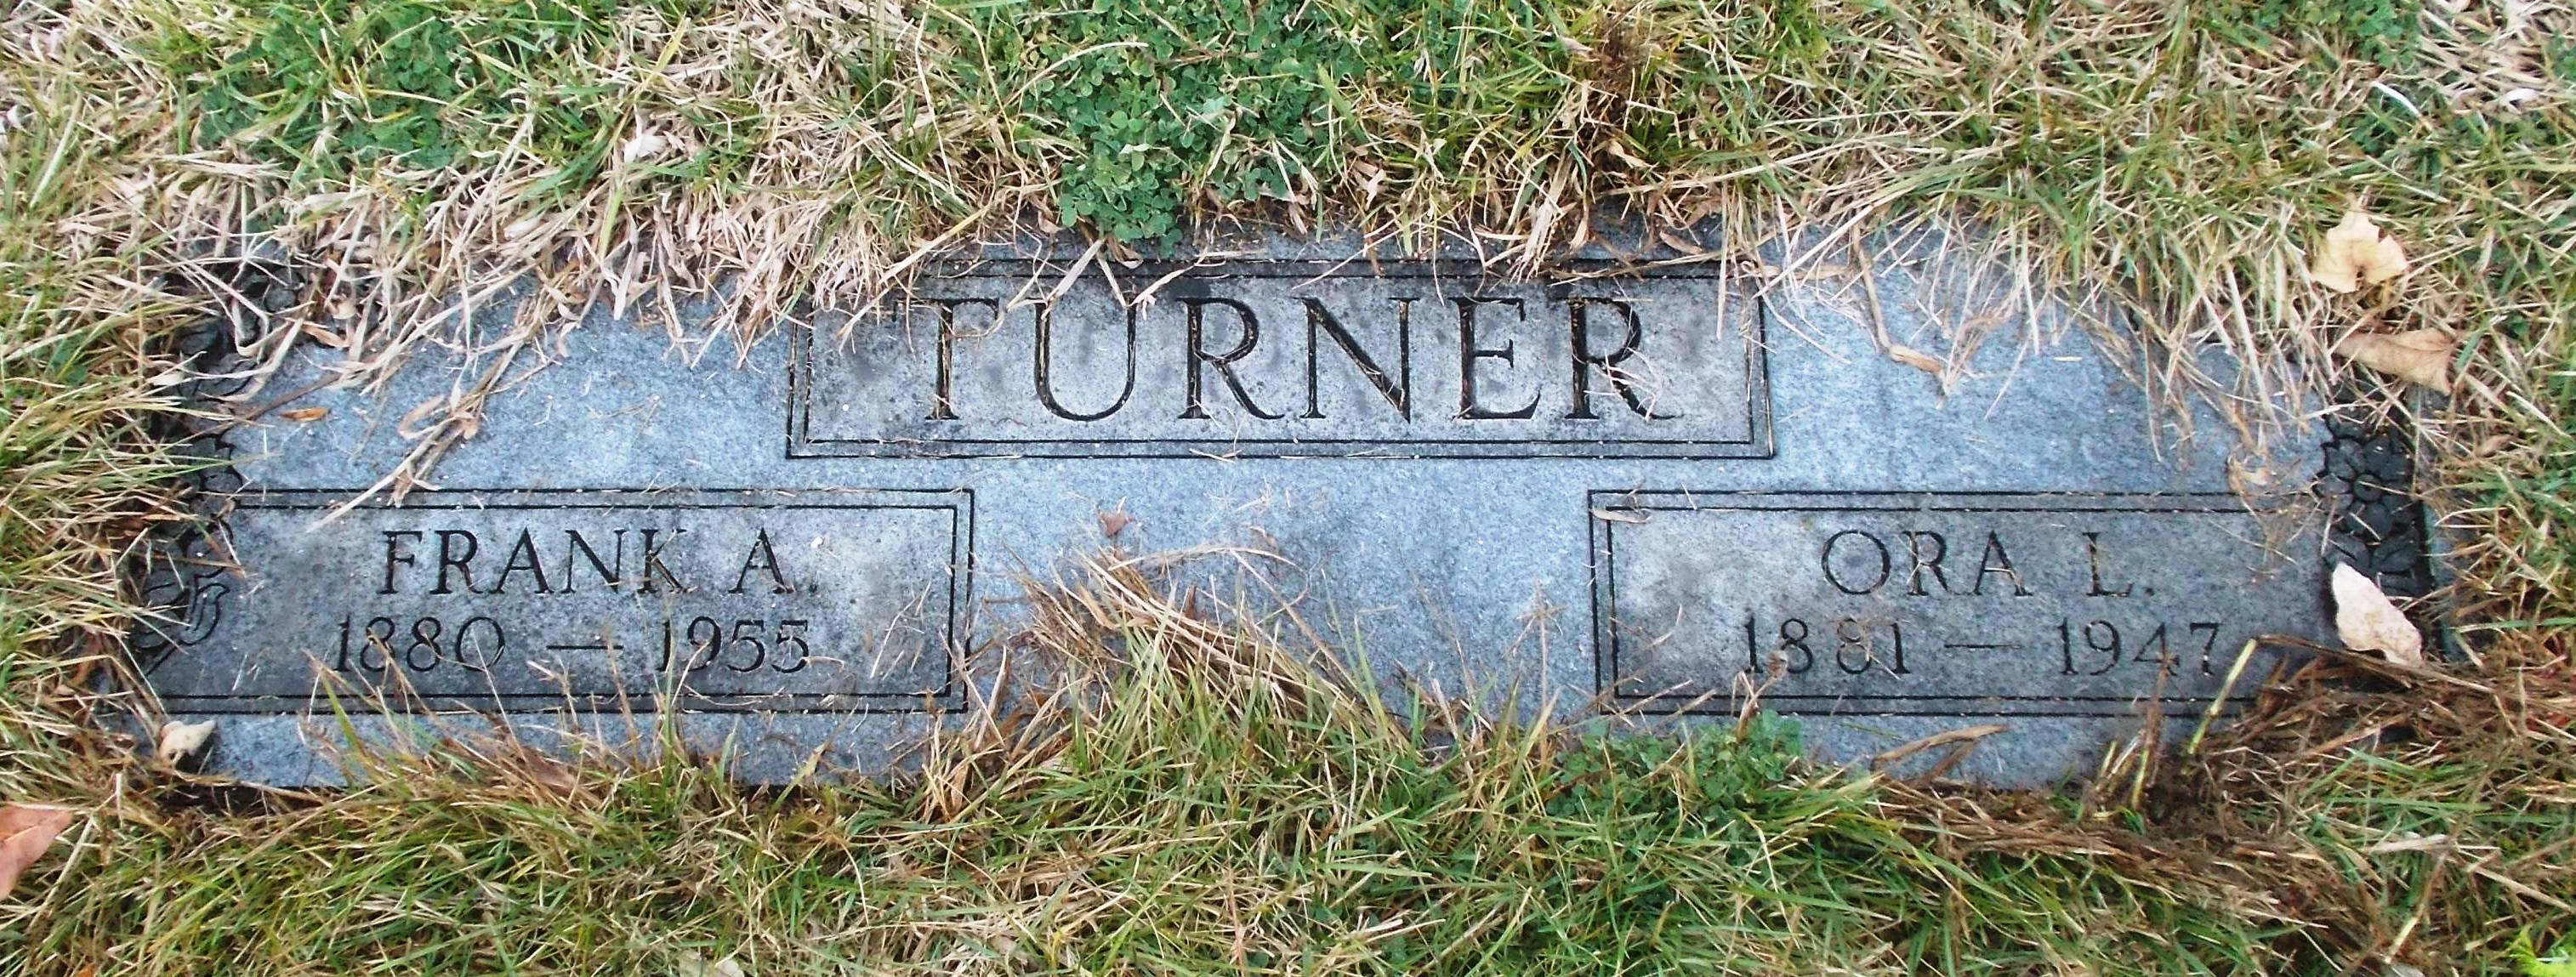 Frank A Turner